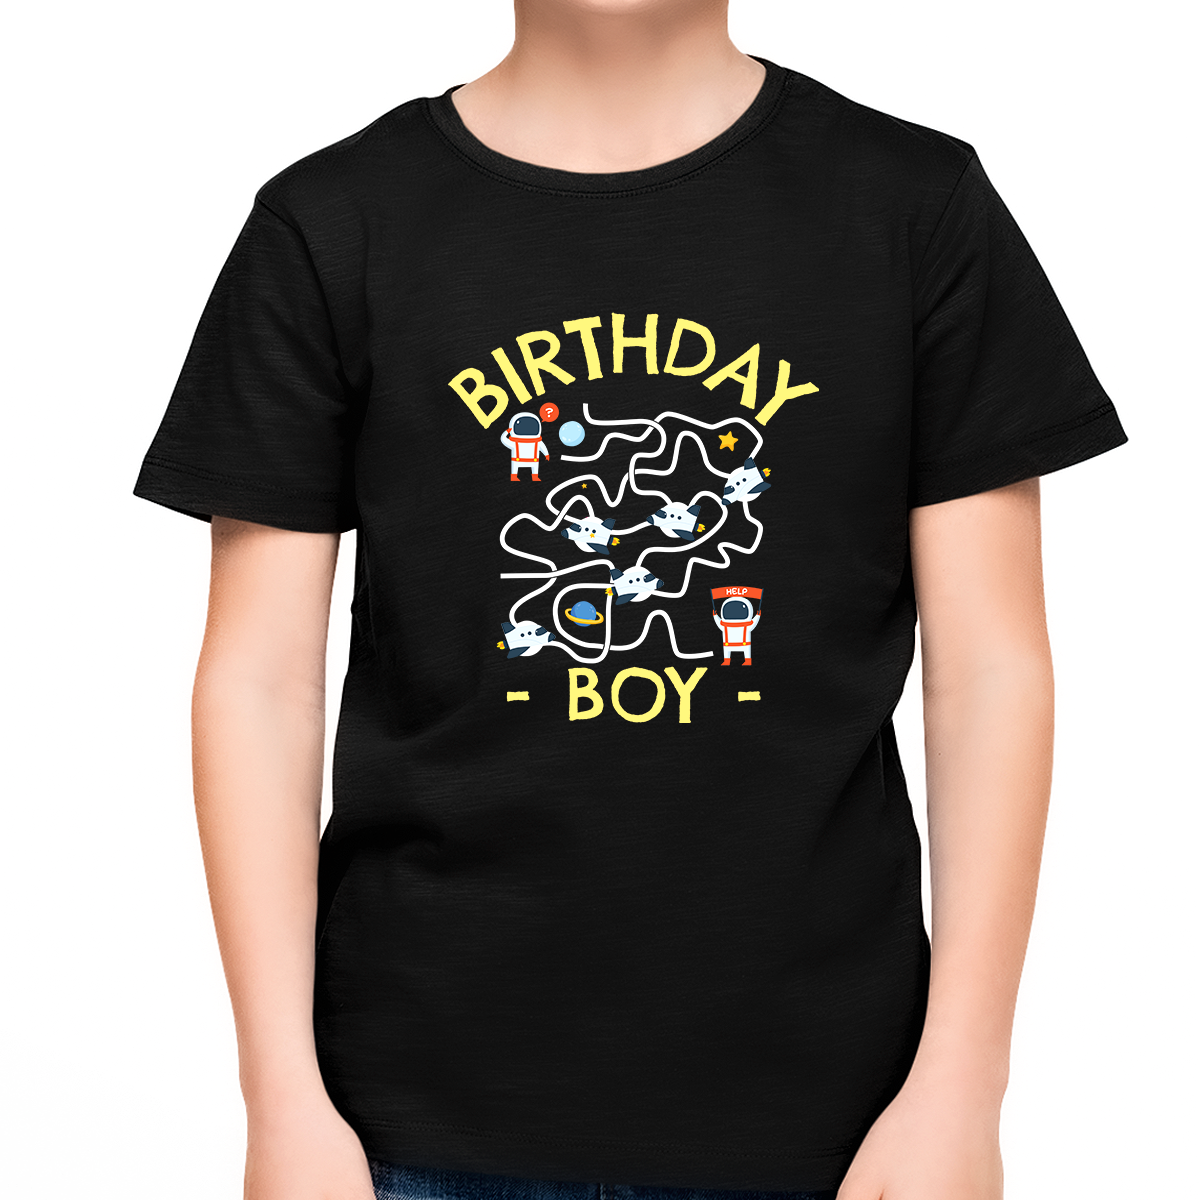 Space Birthday Shirt Boy Birthday Boy Shirt Space Birthday Shirts Birthday Boy Clothes